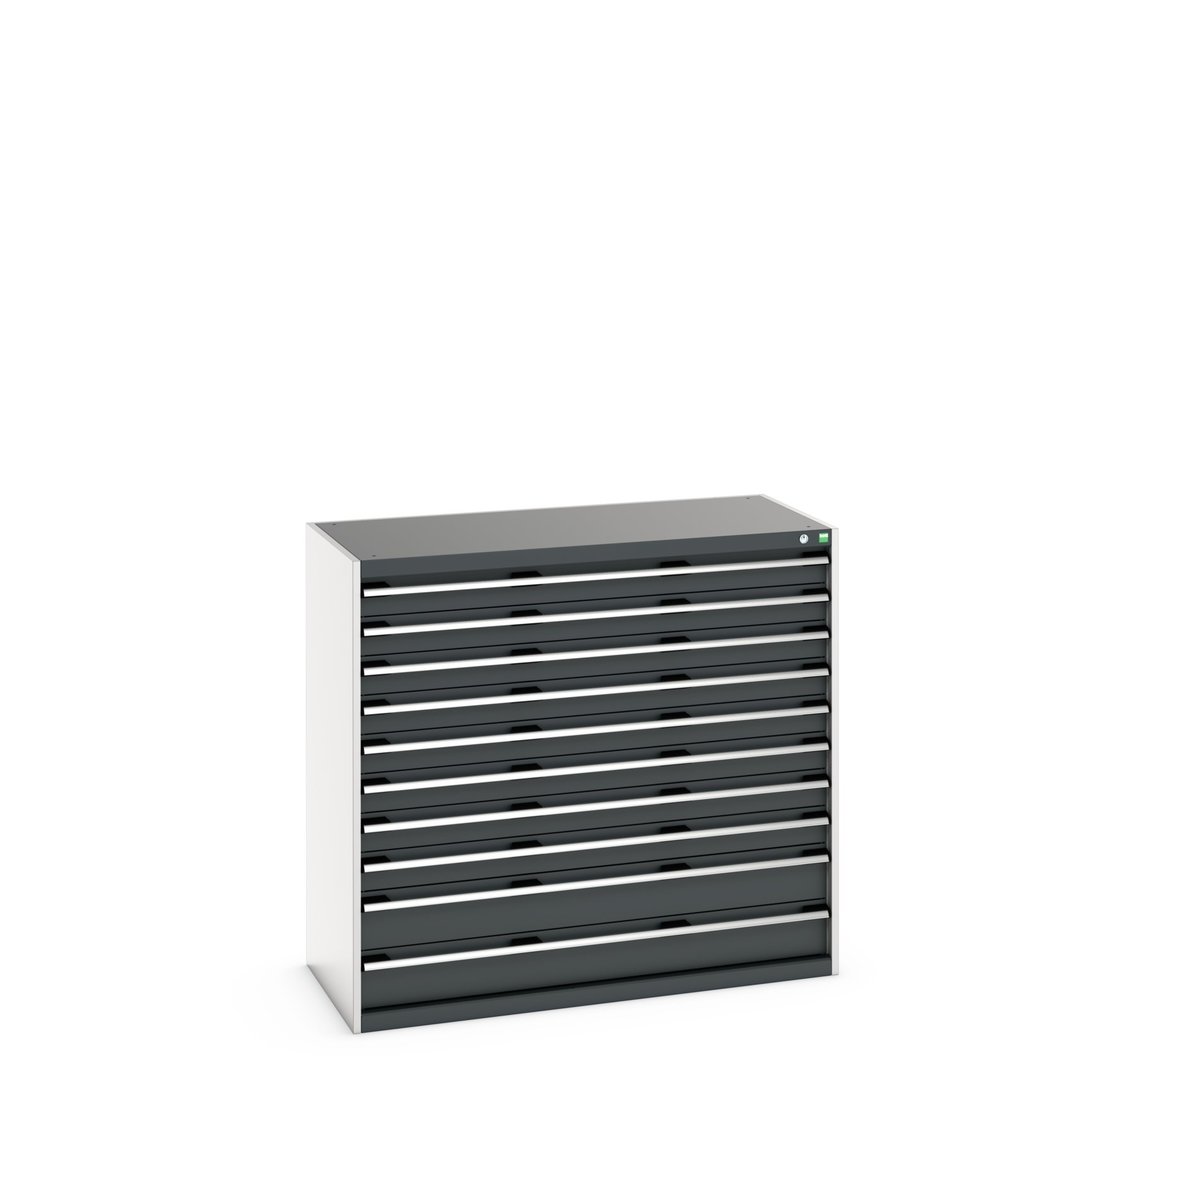 40022131. - cubio drawer cabinet